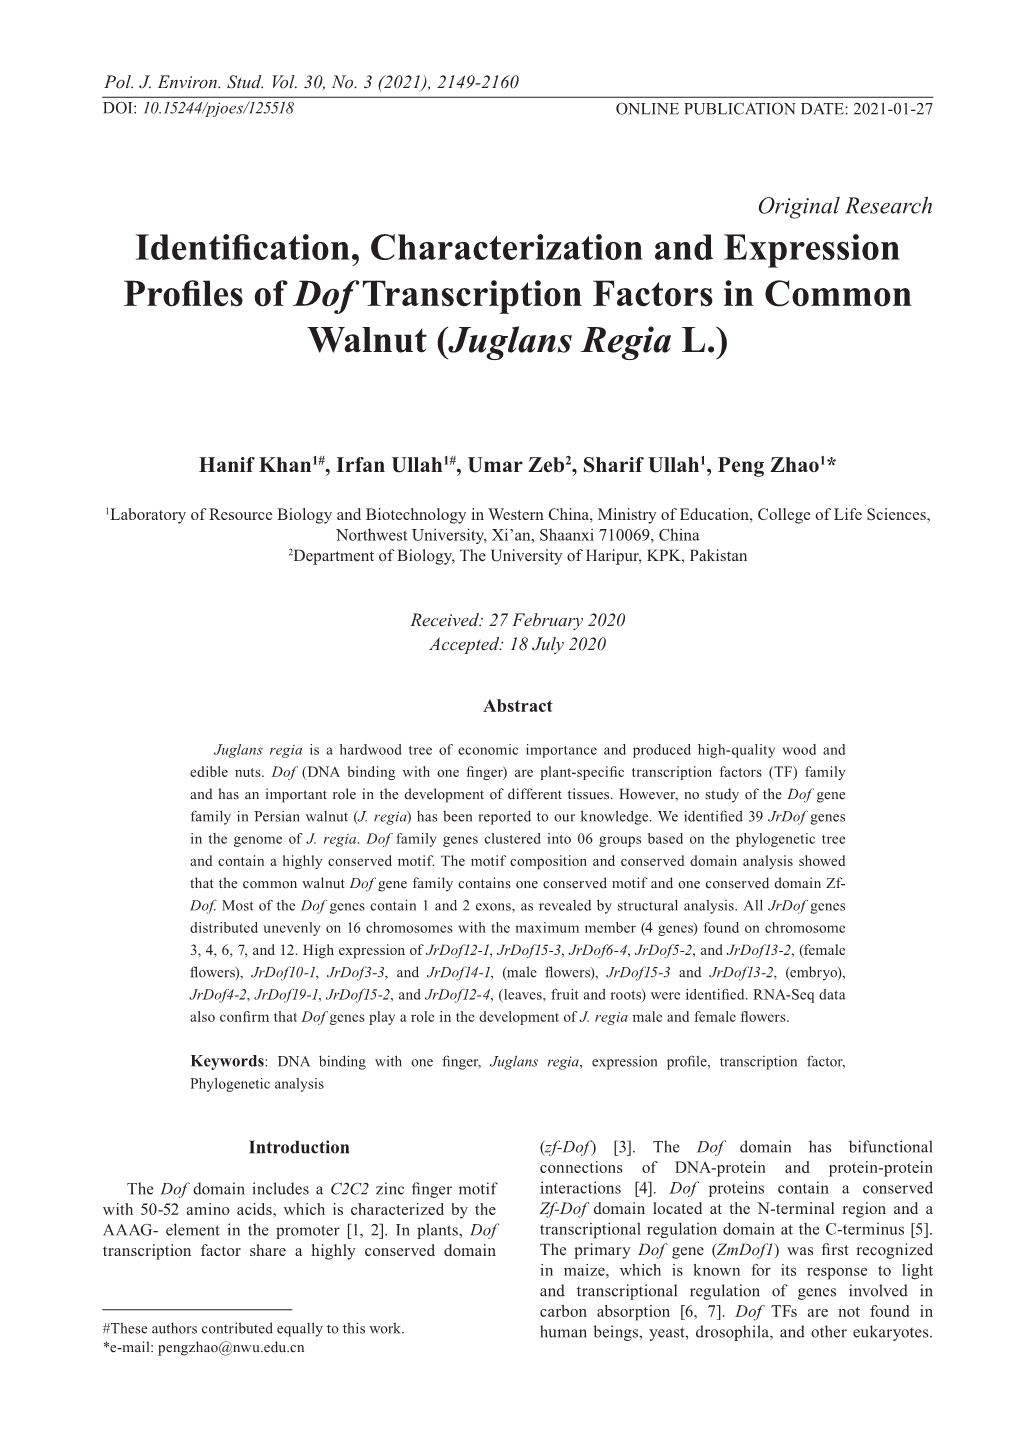 Identification, Characterization and Expression Profiles of Dof Transcription Factors in Common Walnut (Juglans Regia L.)